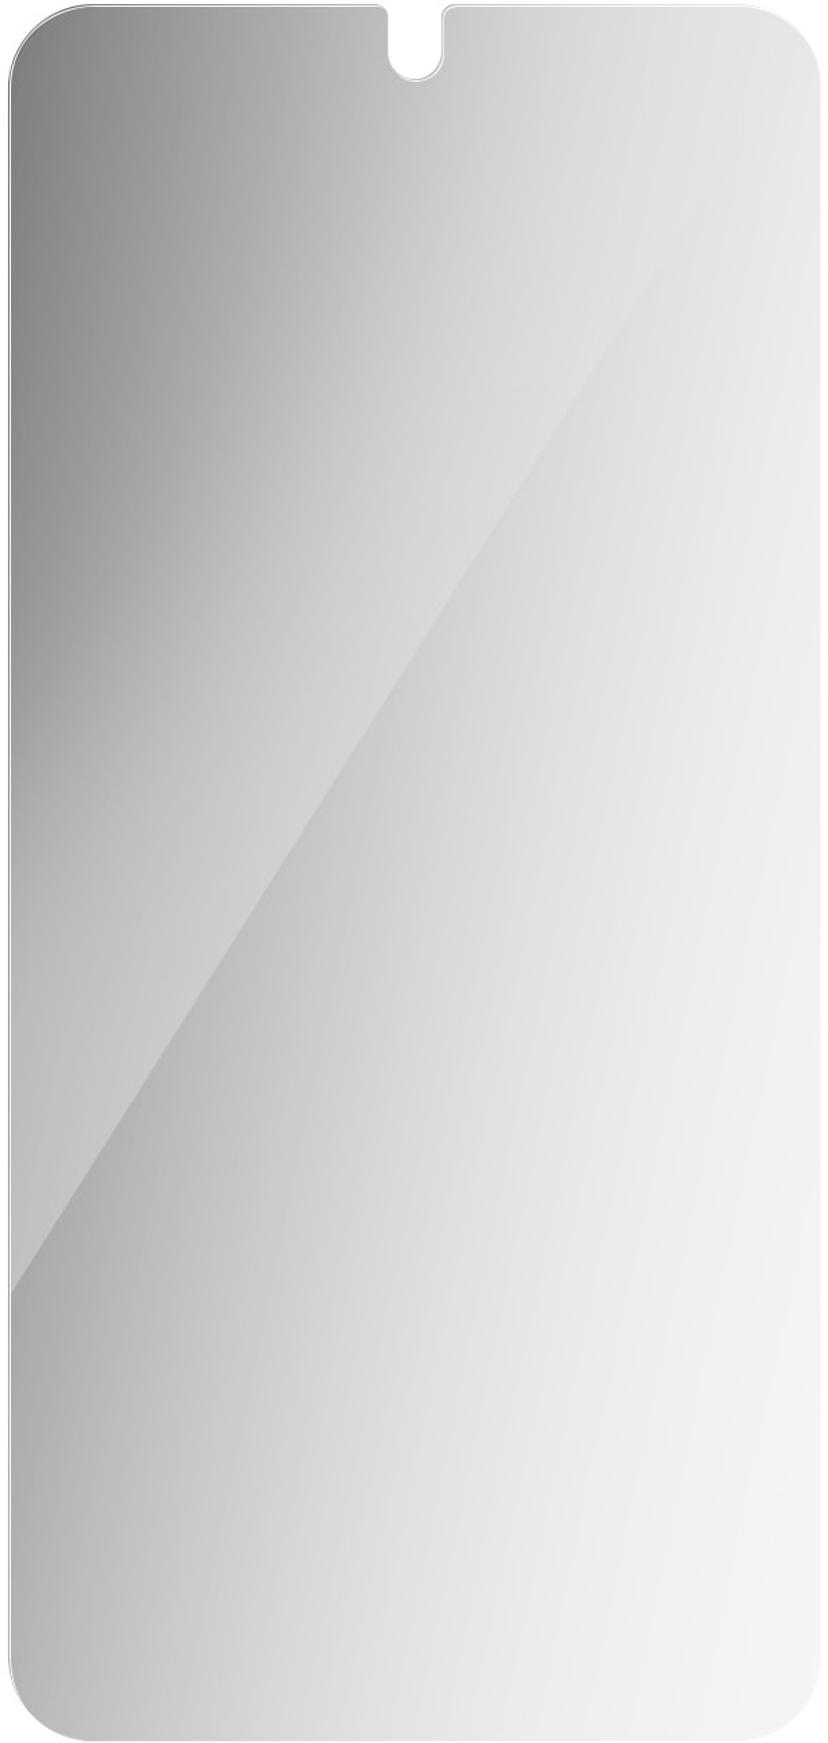 Panzerglass Ultra-wide Fit Privacy Samsung Galaxy S24